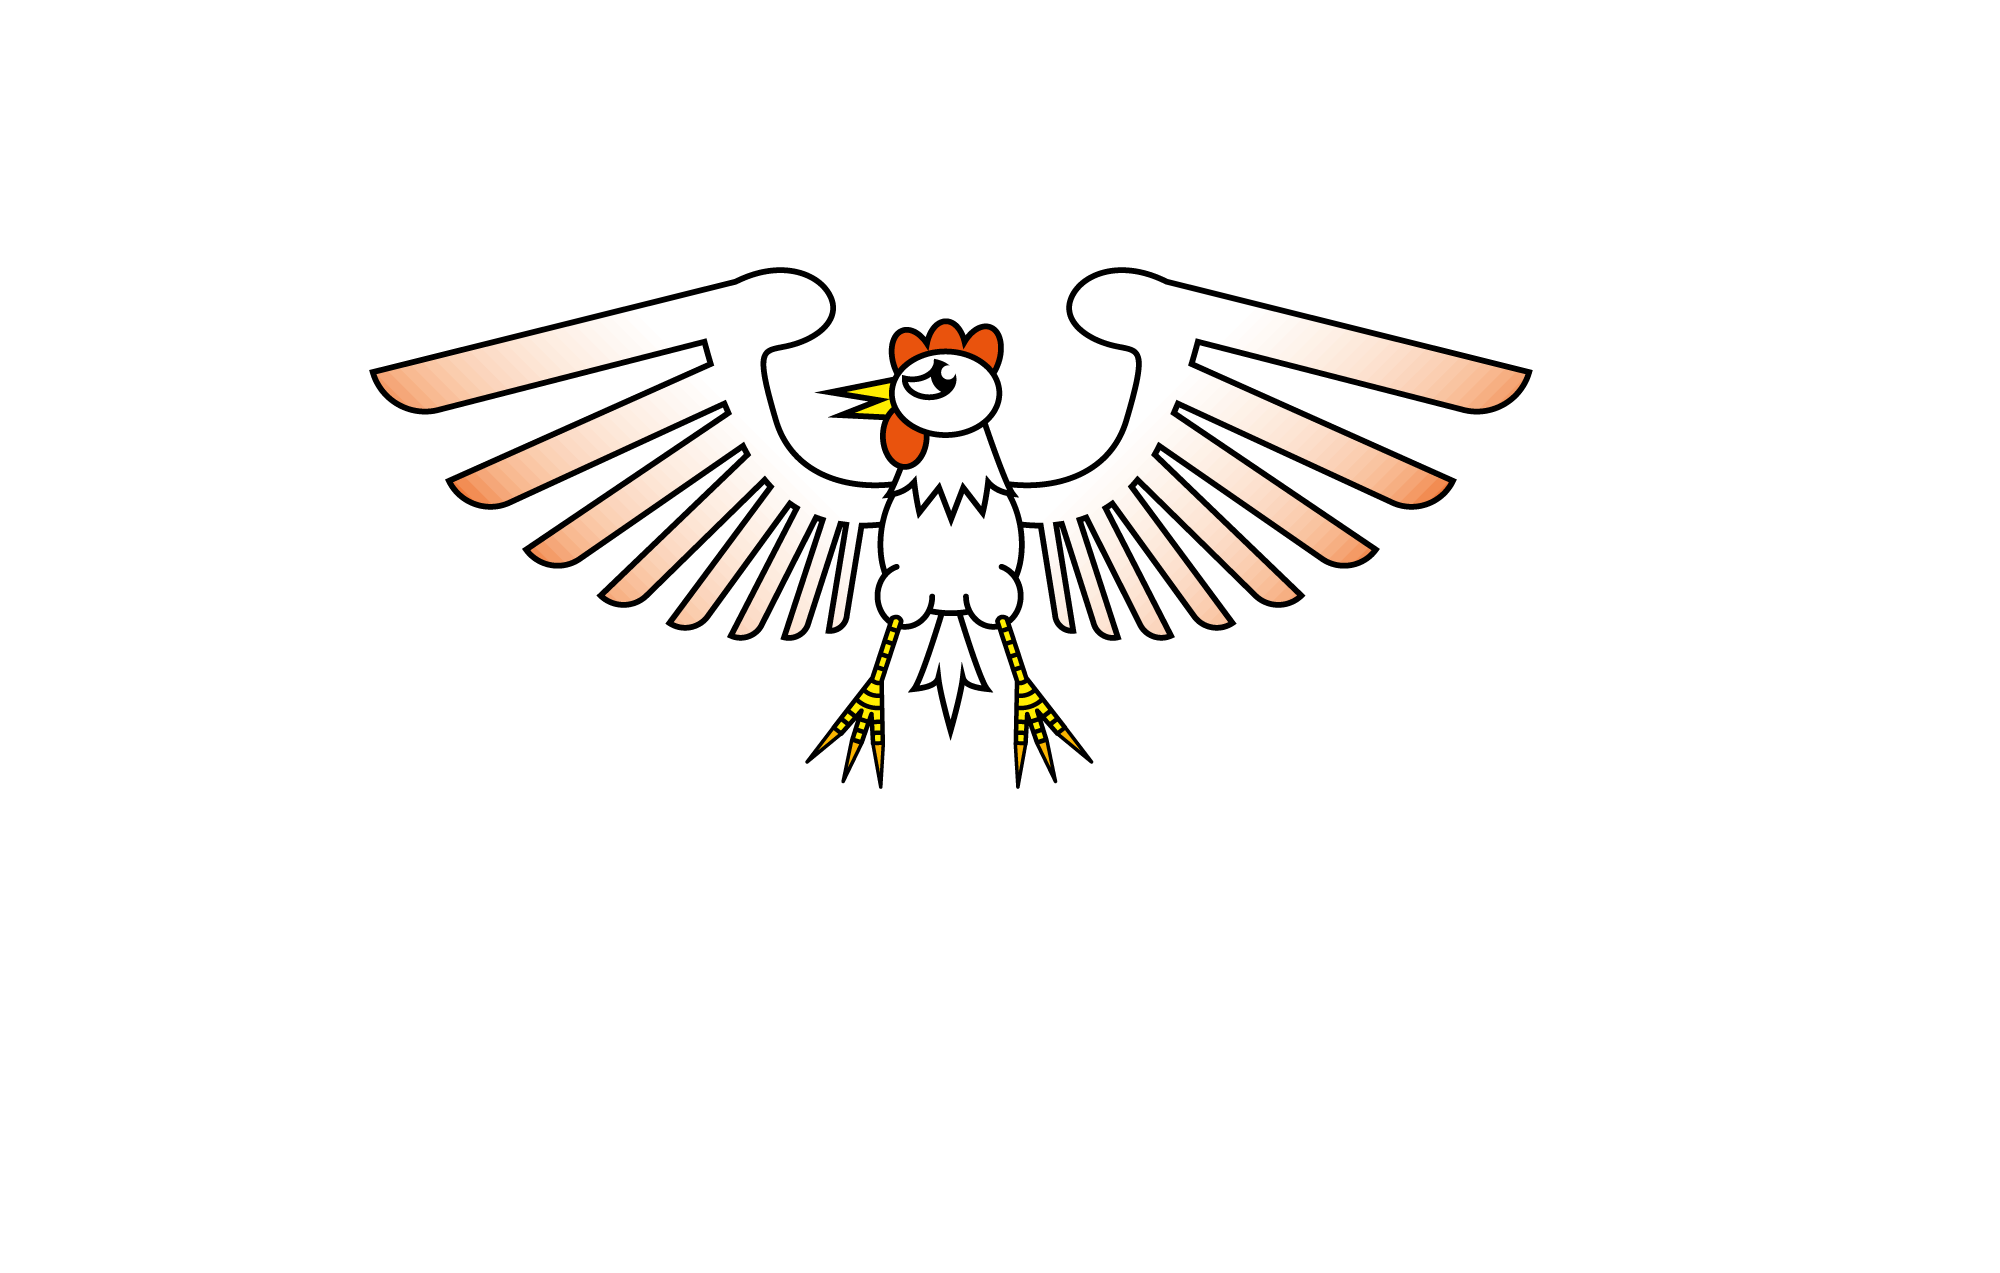 Hhnerbach Logo